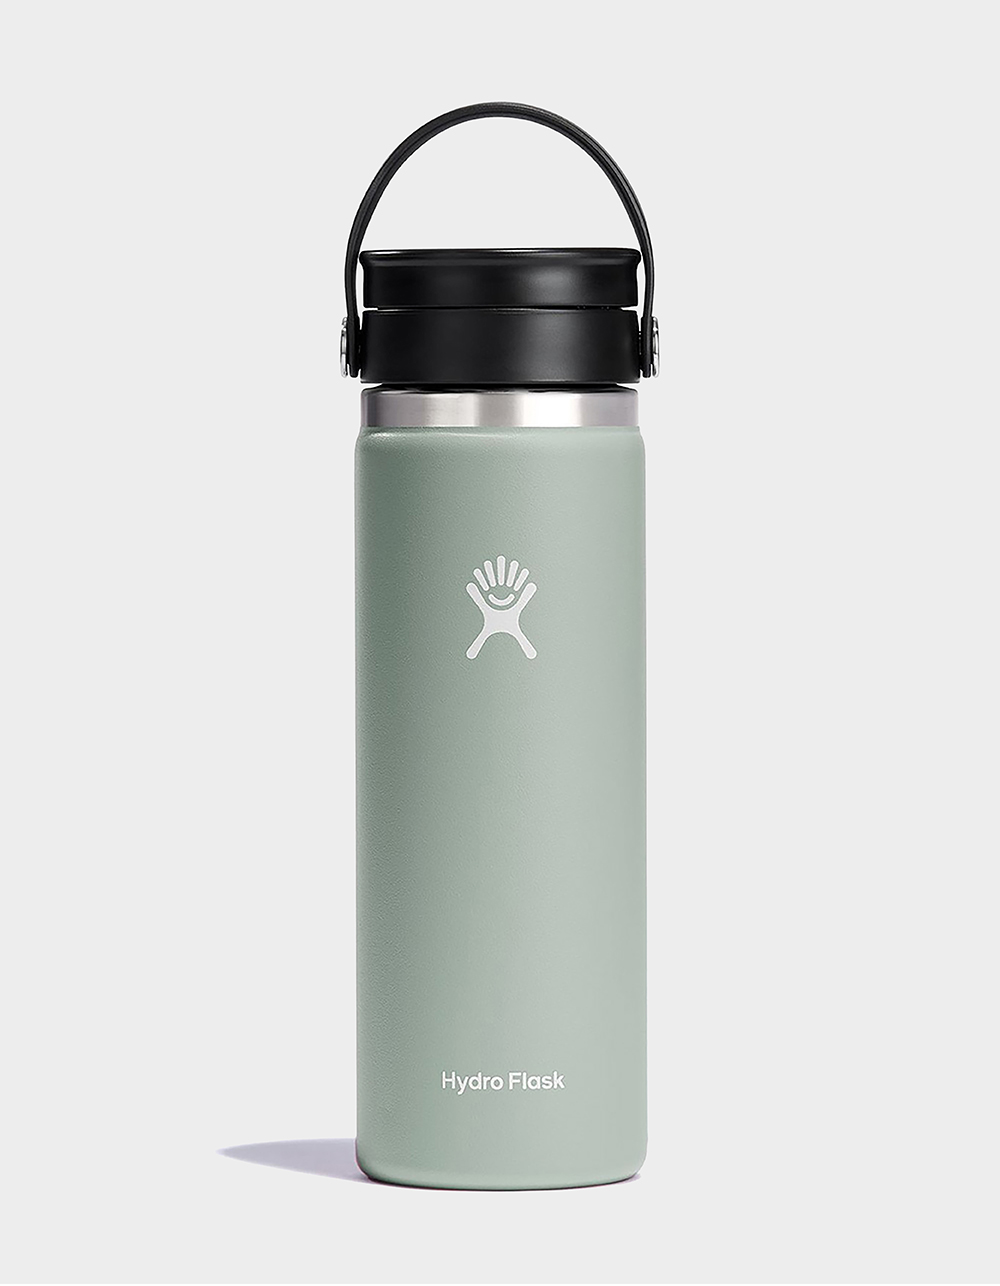 HydroFlask 12oz Mug – Twin Valley Coffee